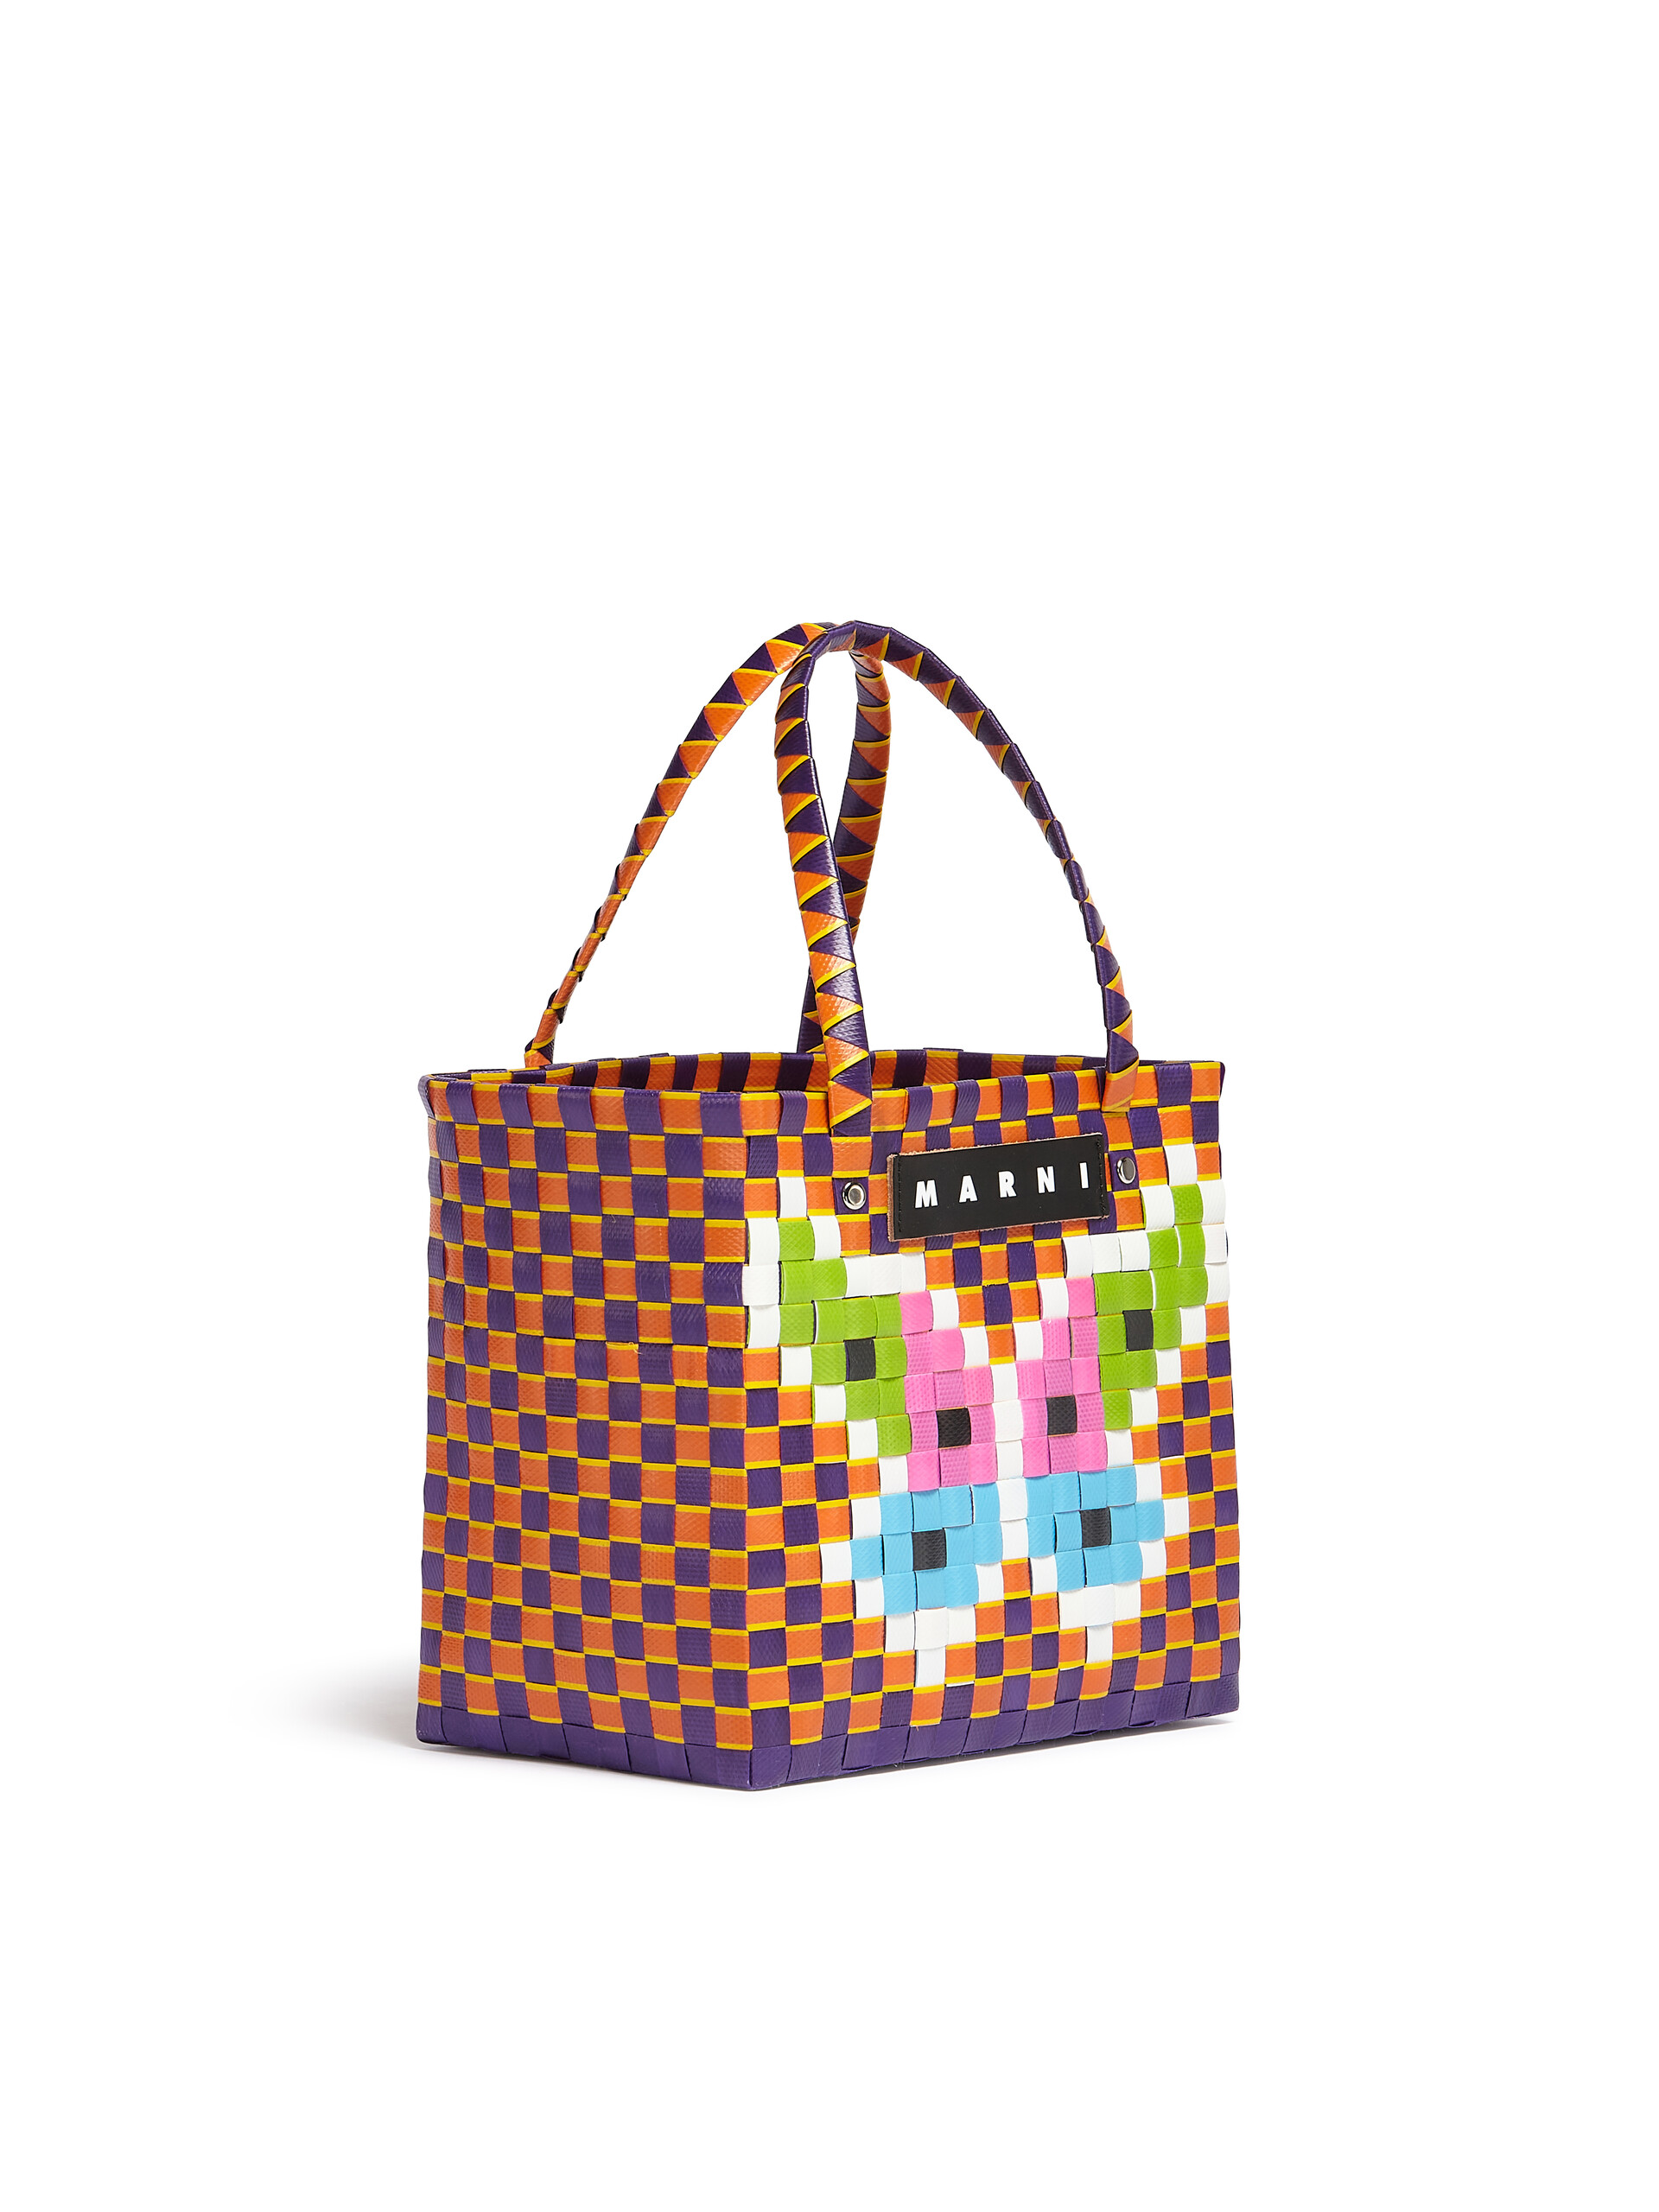 MARNI MARKET FLOWER MINI BASKET bag in orange butterfly motif - Bags - Image 2